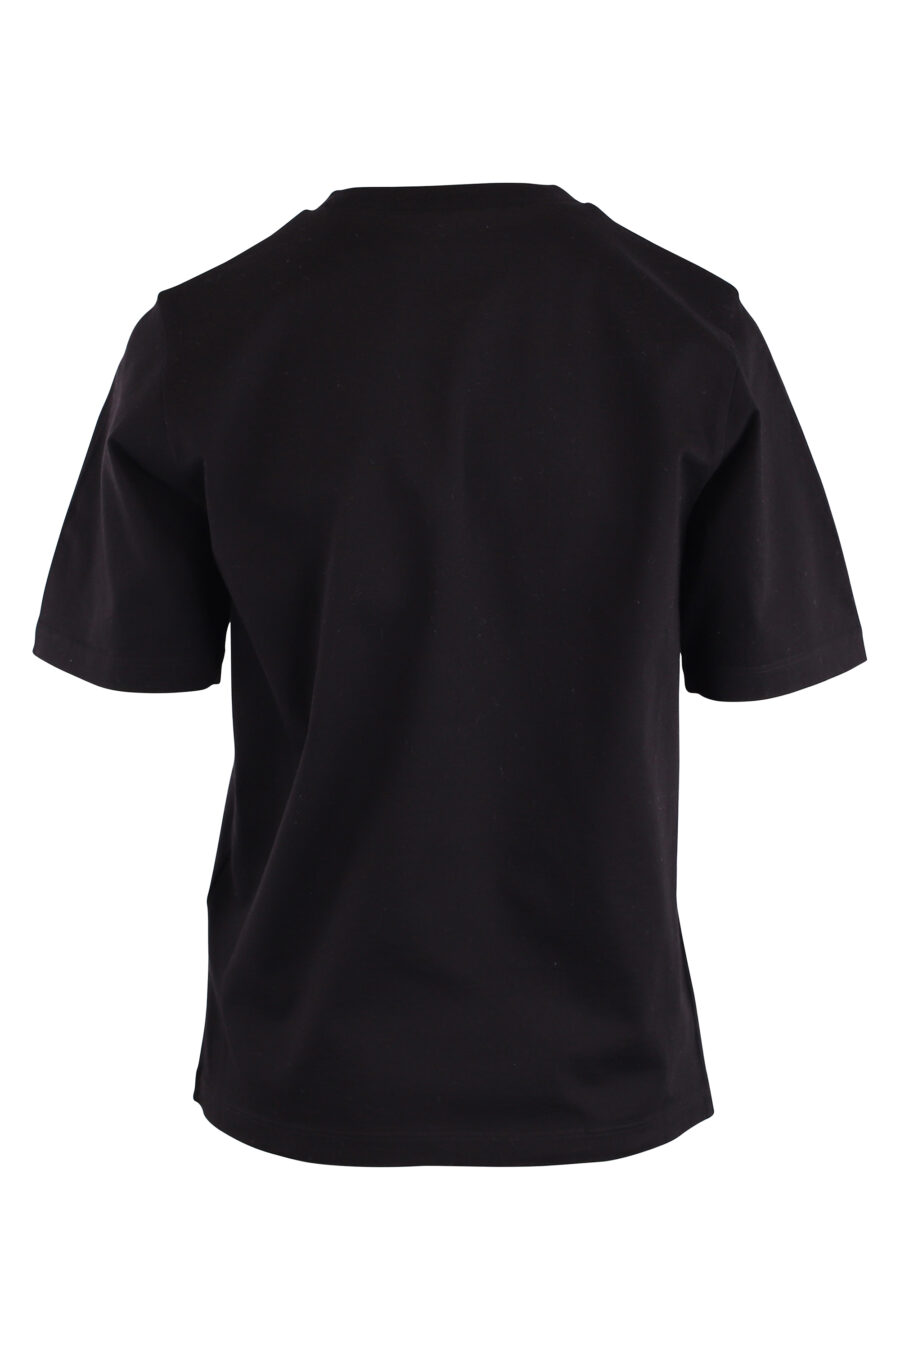 Camiseta negra con logo "icon" y perro surfer - IMG 9127